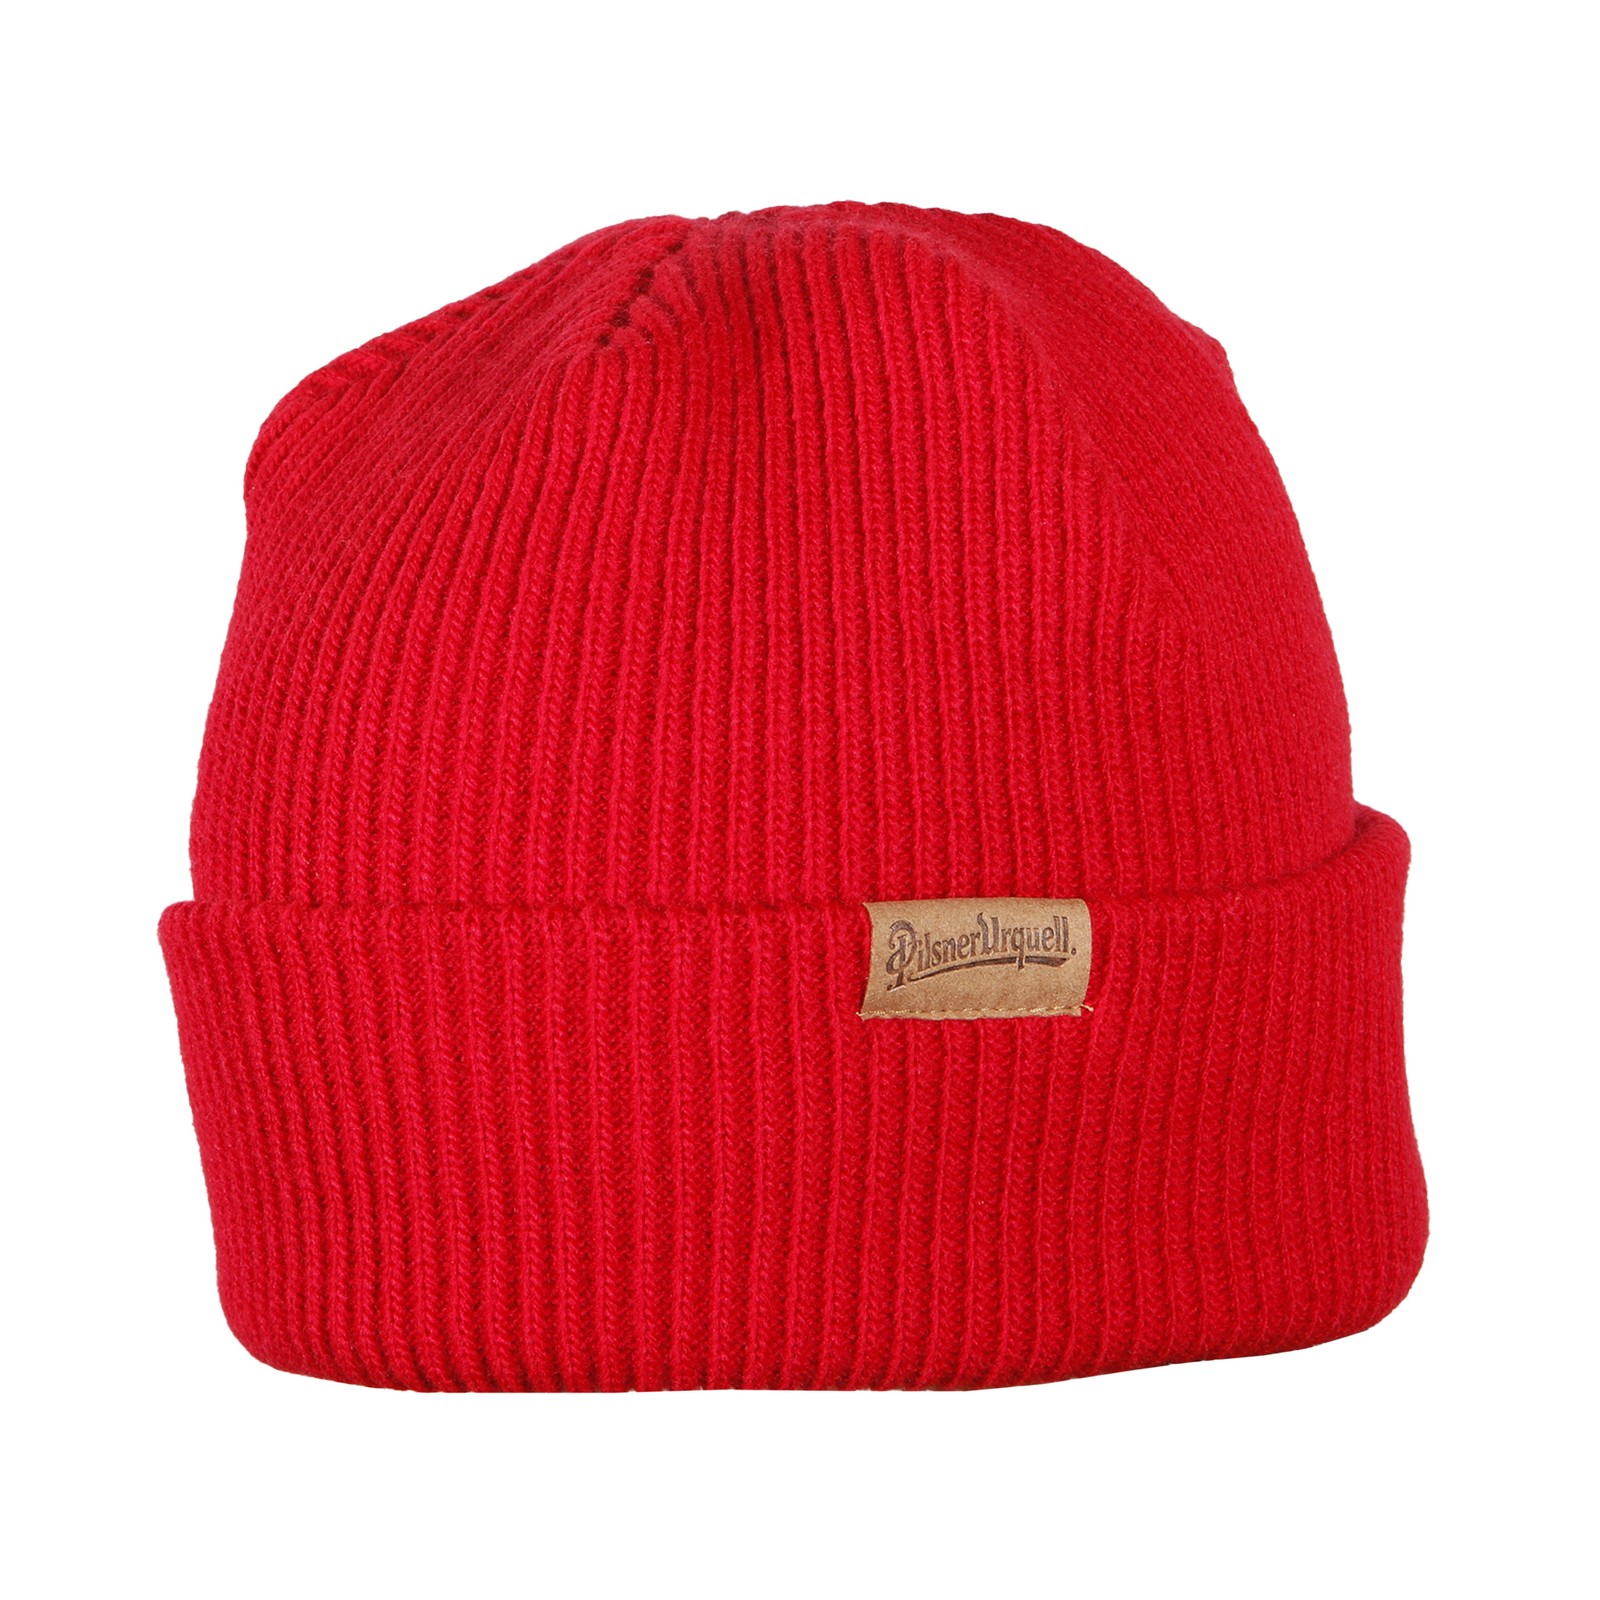 Hat Pilsner Urquell red